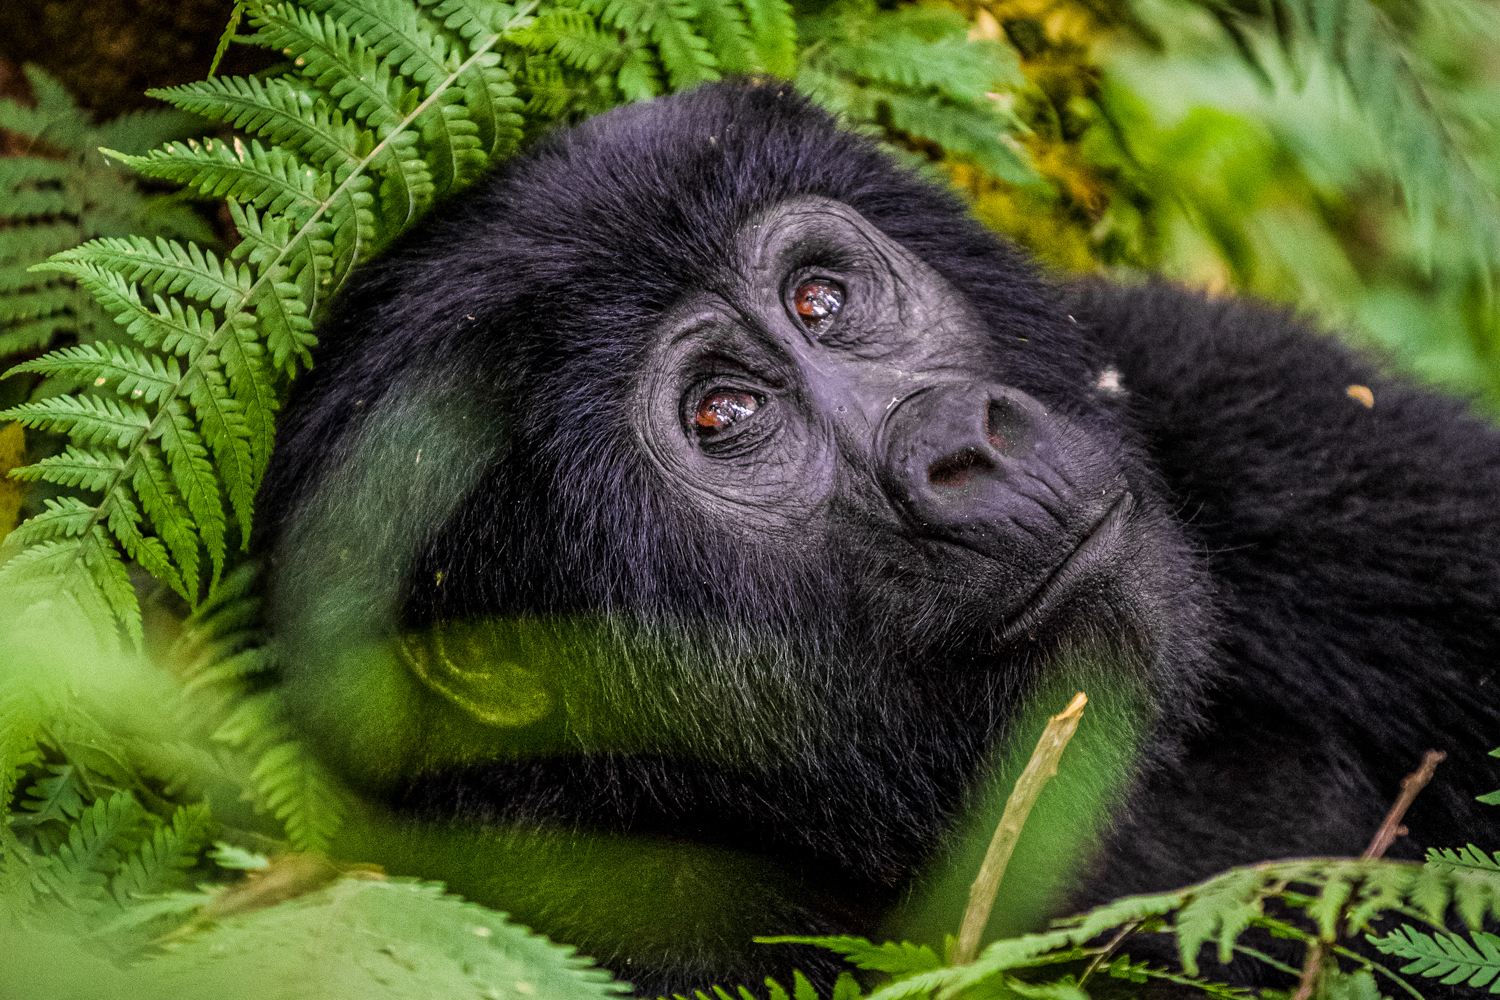 A mountain gorilla in Bwindi Impenetrable National Park, Uganda.